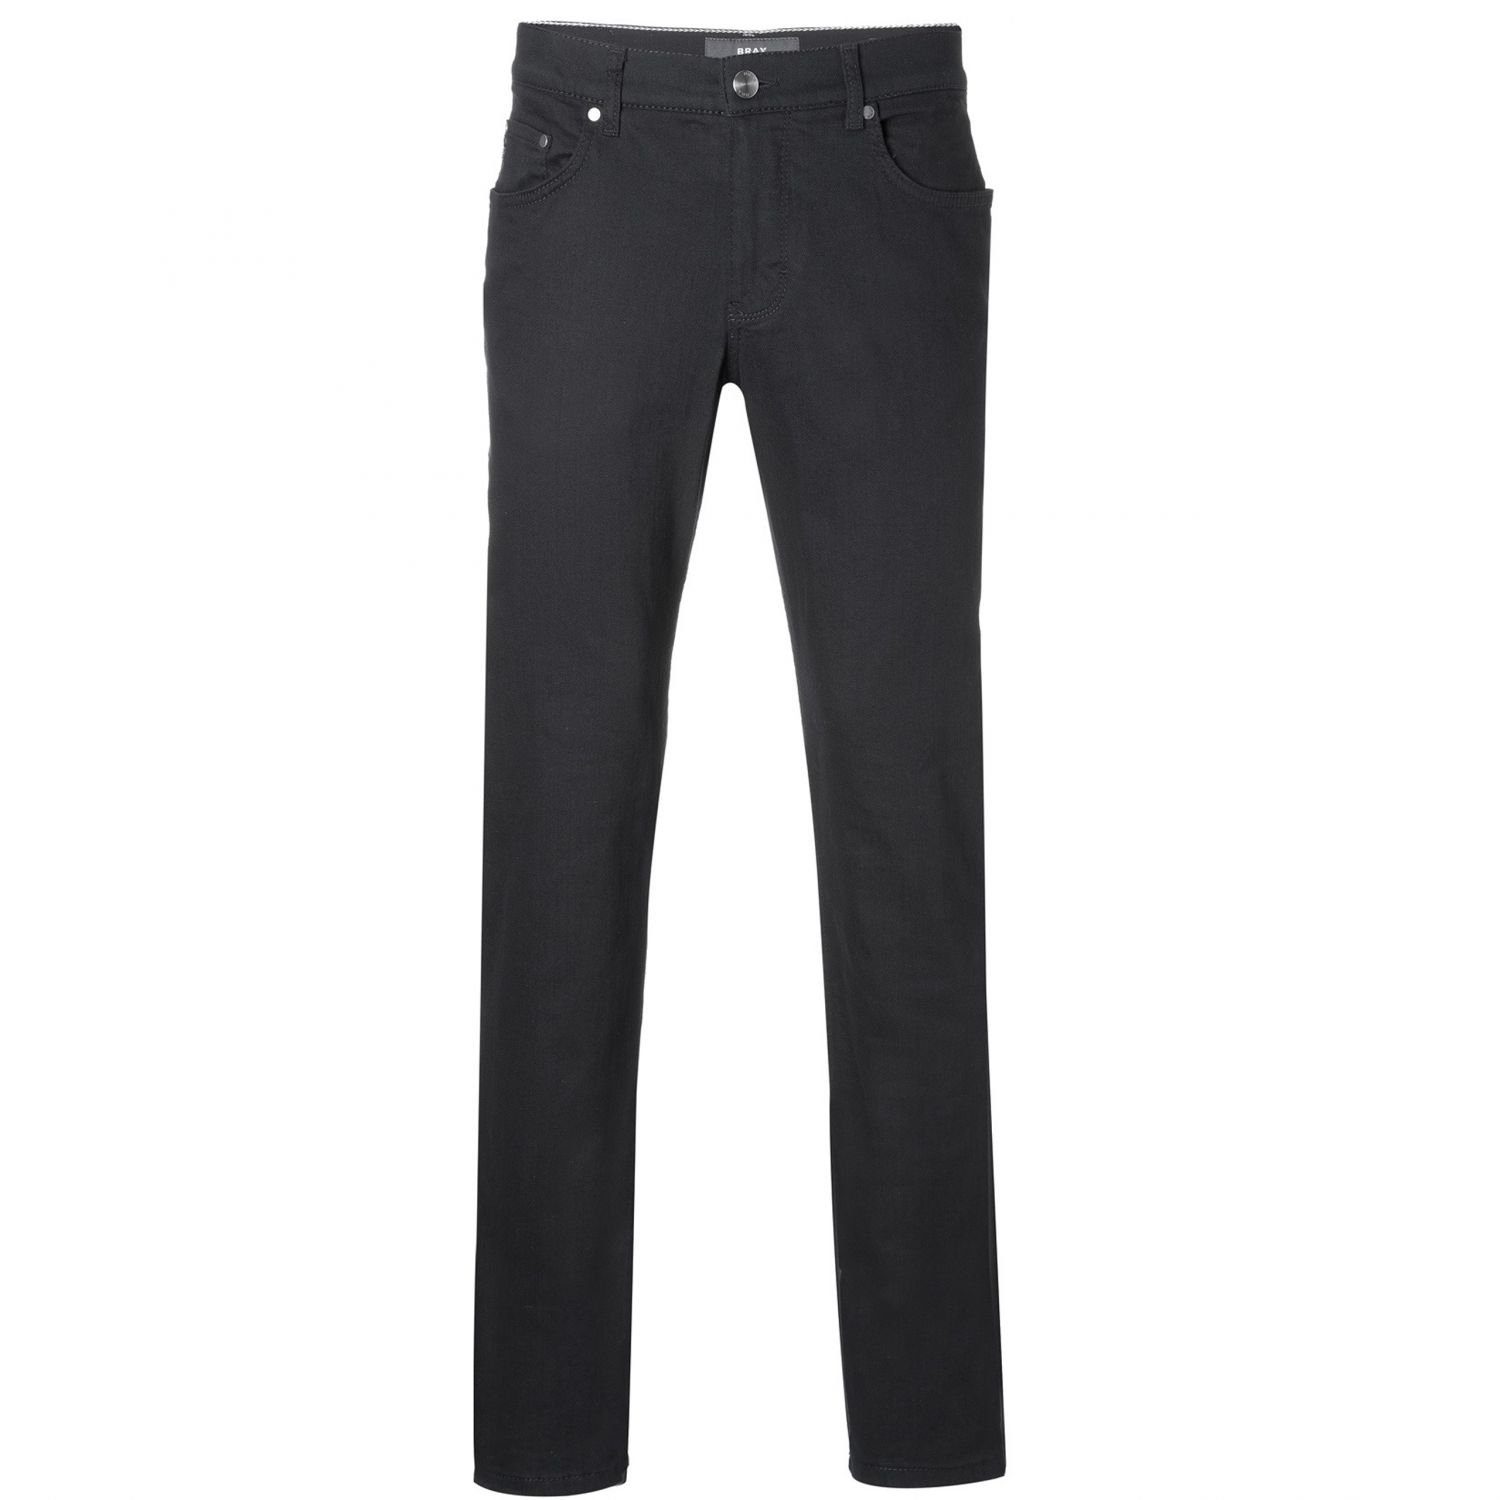 Cooper 5-Pocket-Jeans Herren Jeans schwarz Style Denim Brax